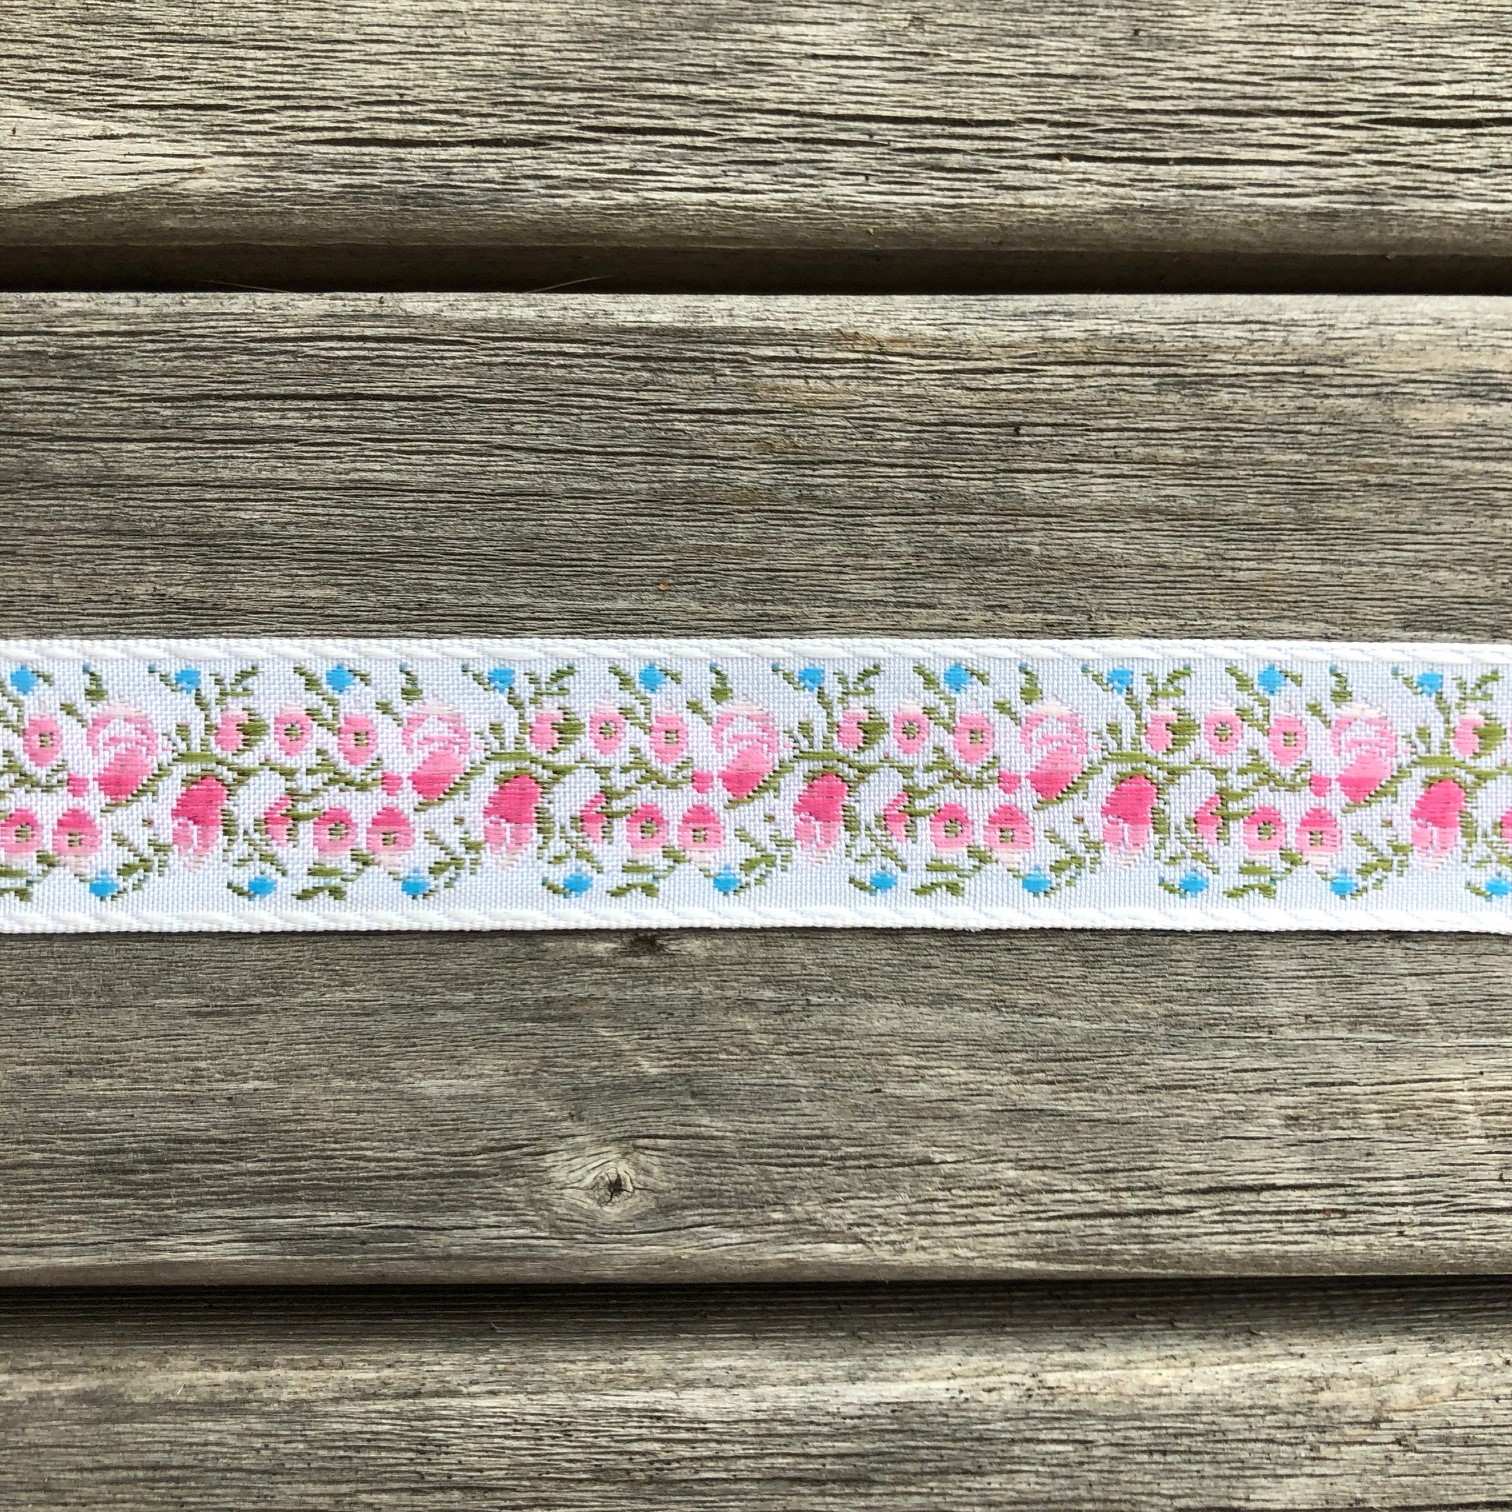 Dekorationsband Små rosa blommor 20 mm